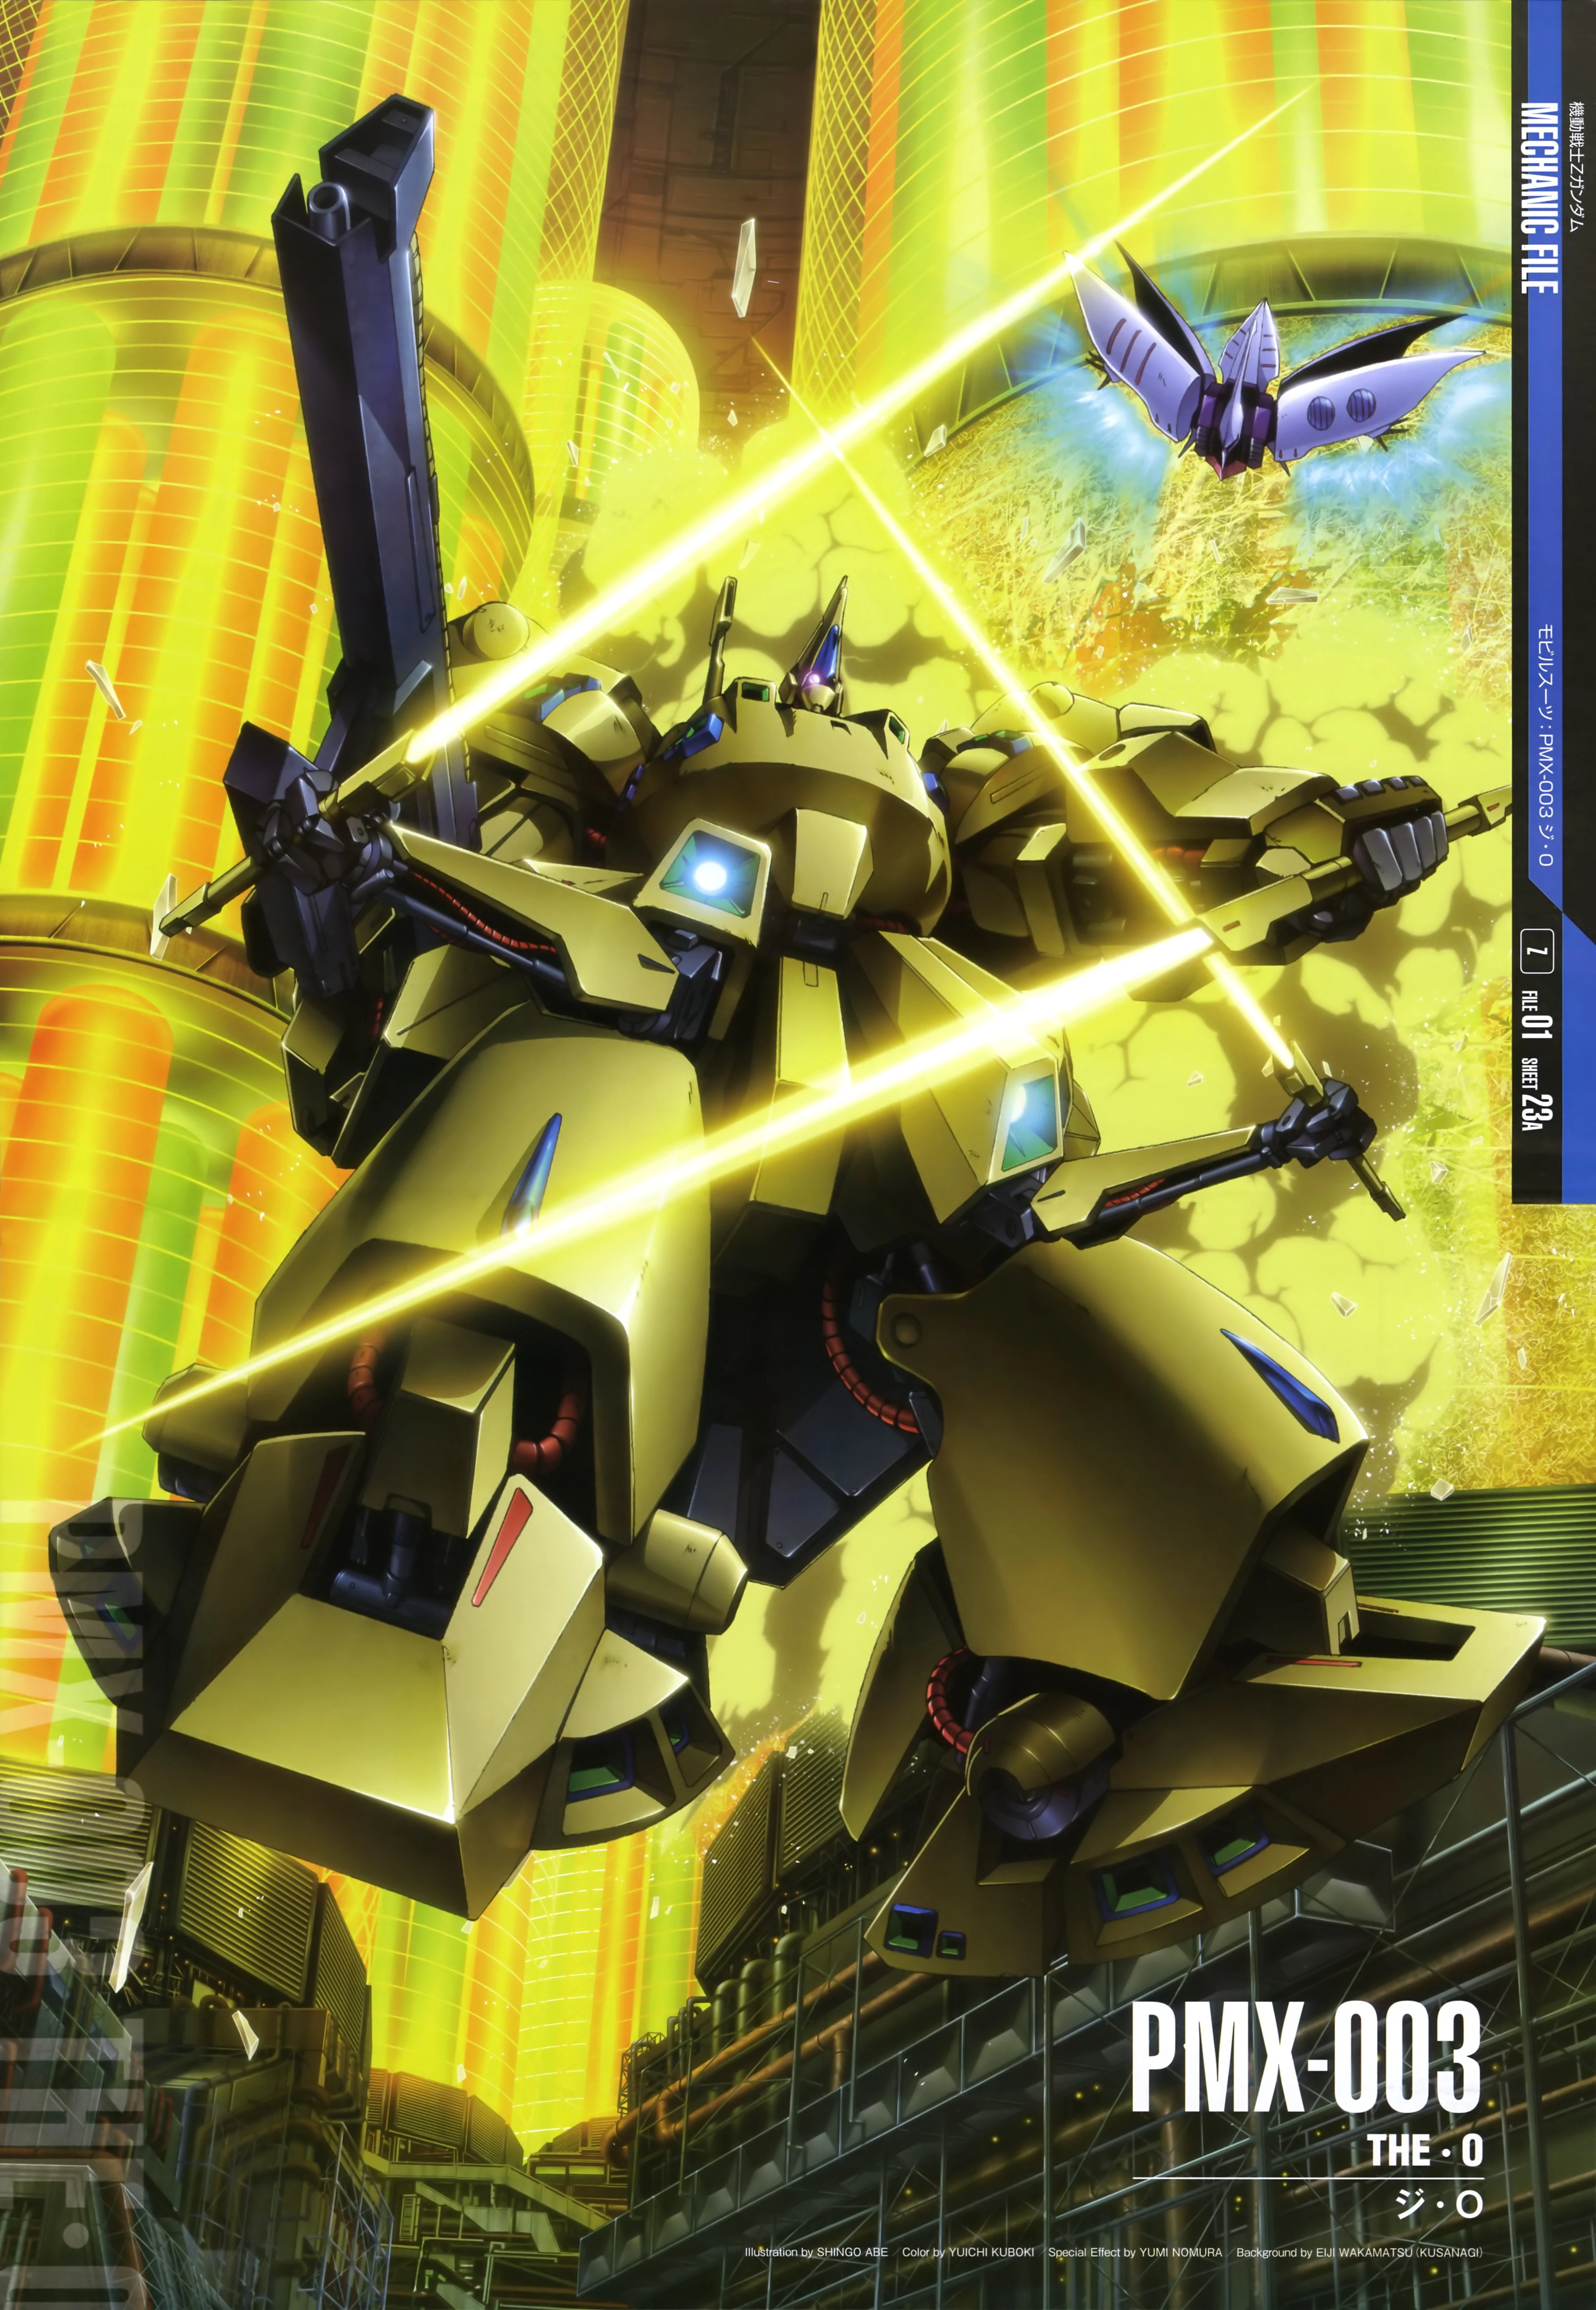 Anime 3934x5693 The-O Mobile Suit Zeta Gundam Mobile Suit anime mechs Super Robot Taisen artwork digital art Qubeley